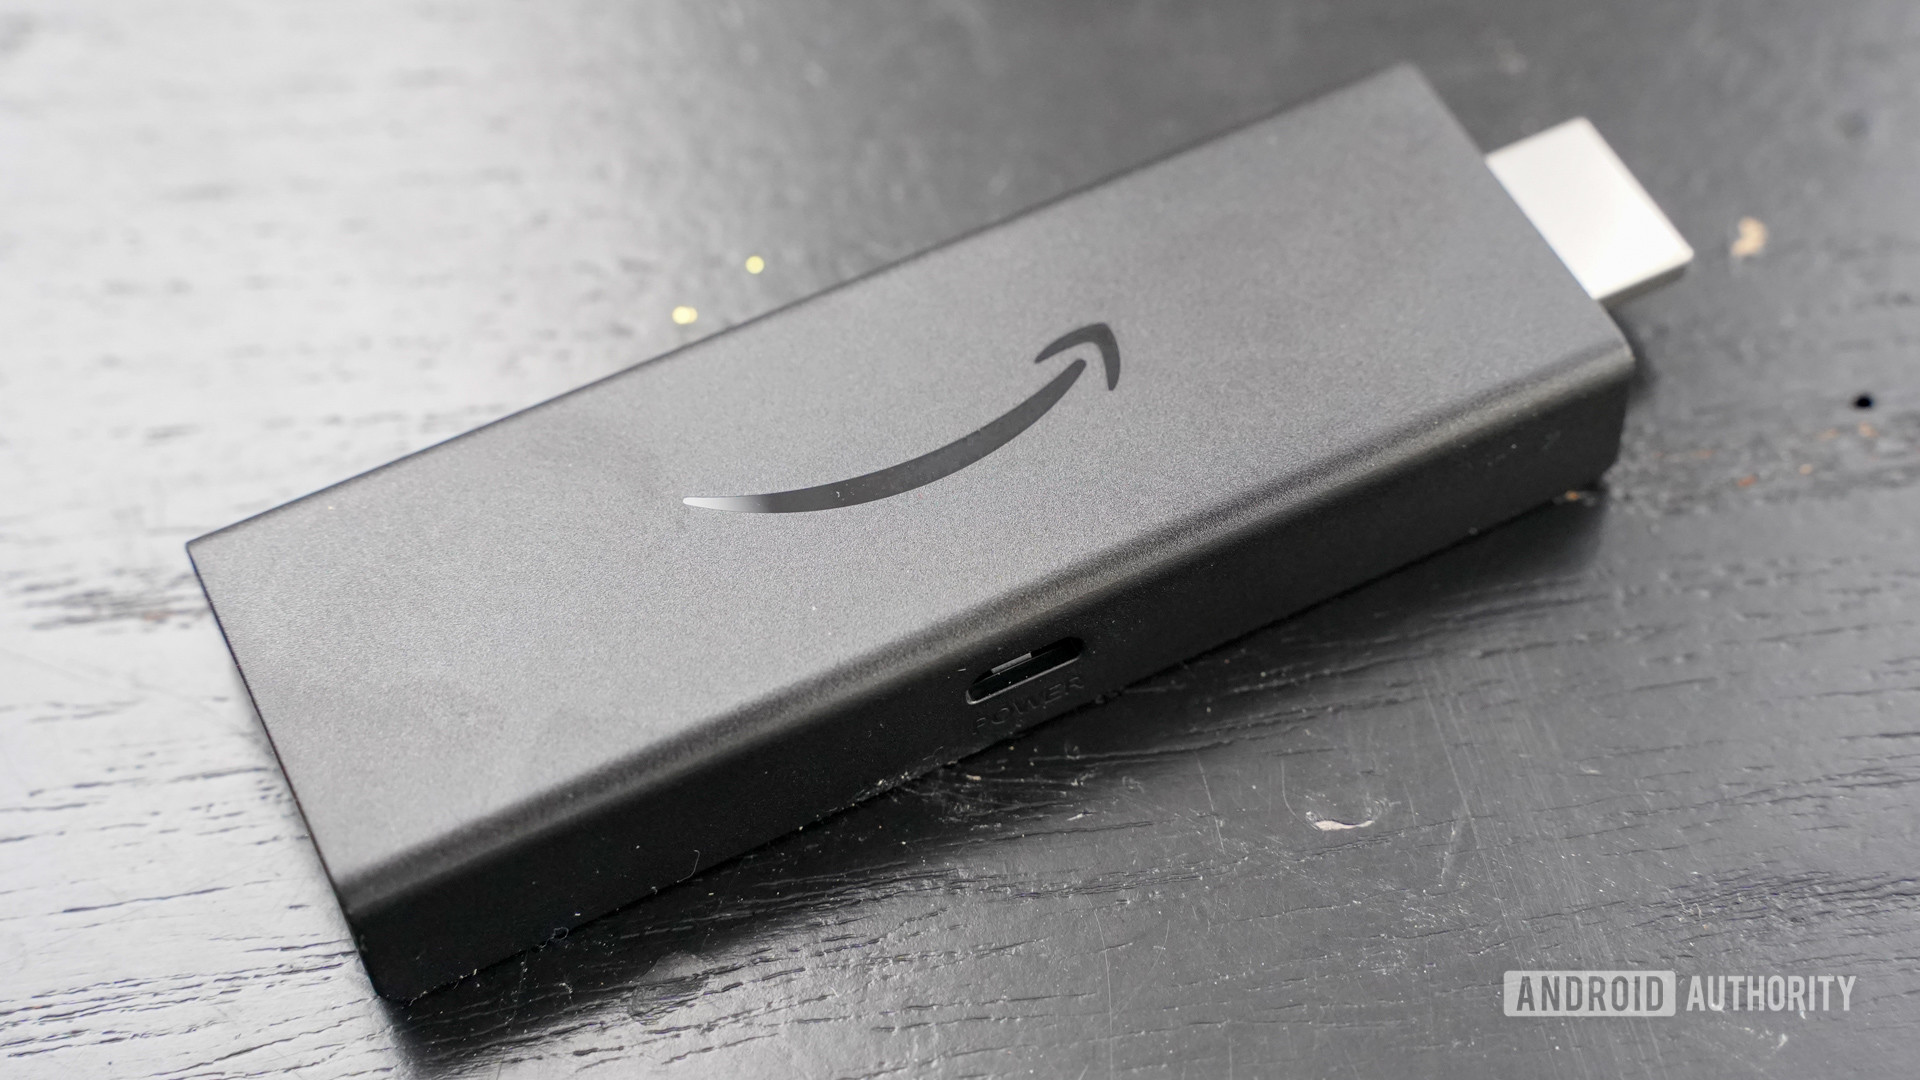 Amazon Fire TV Stick Lite angled by itself